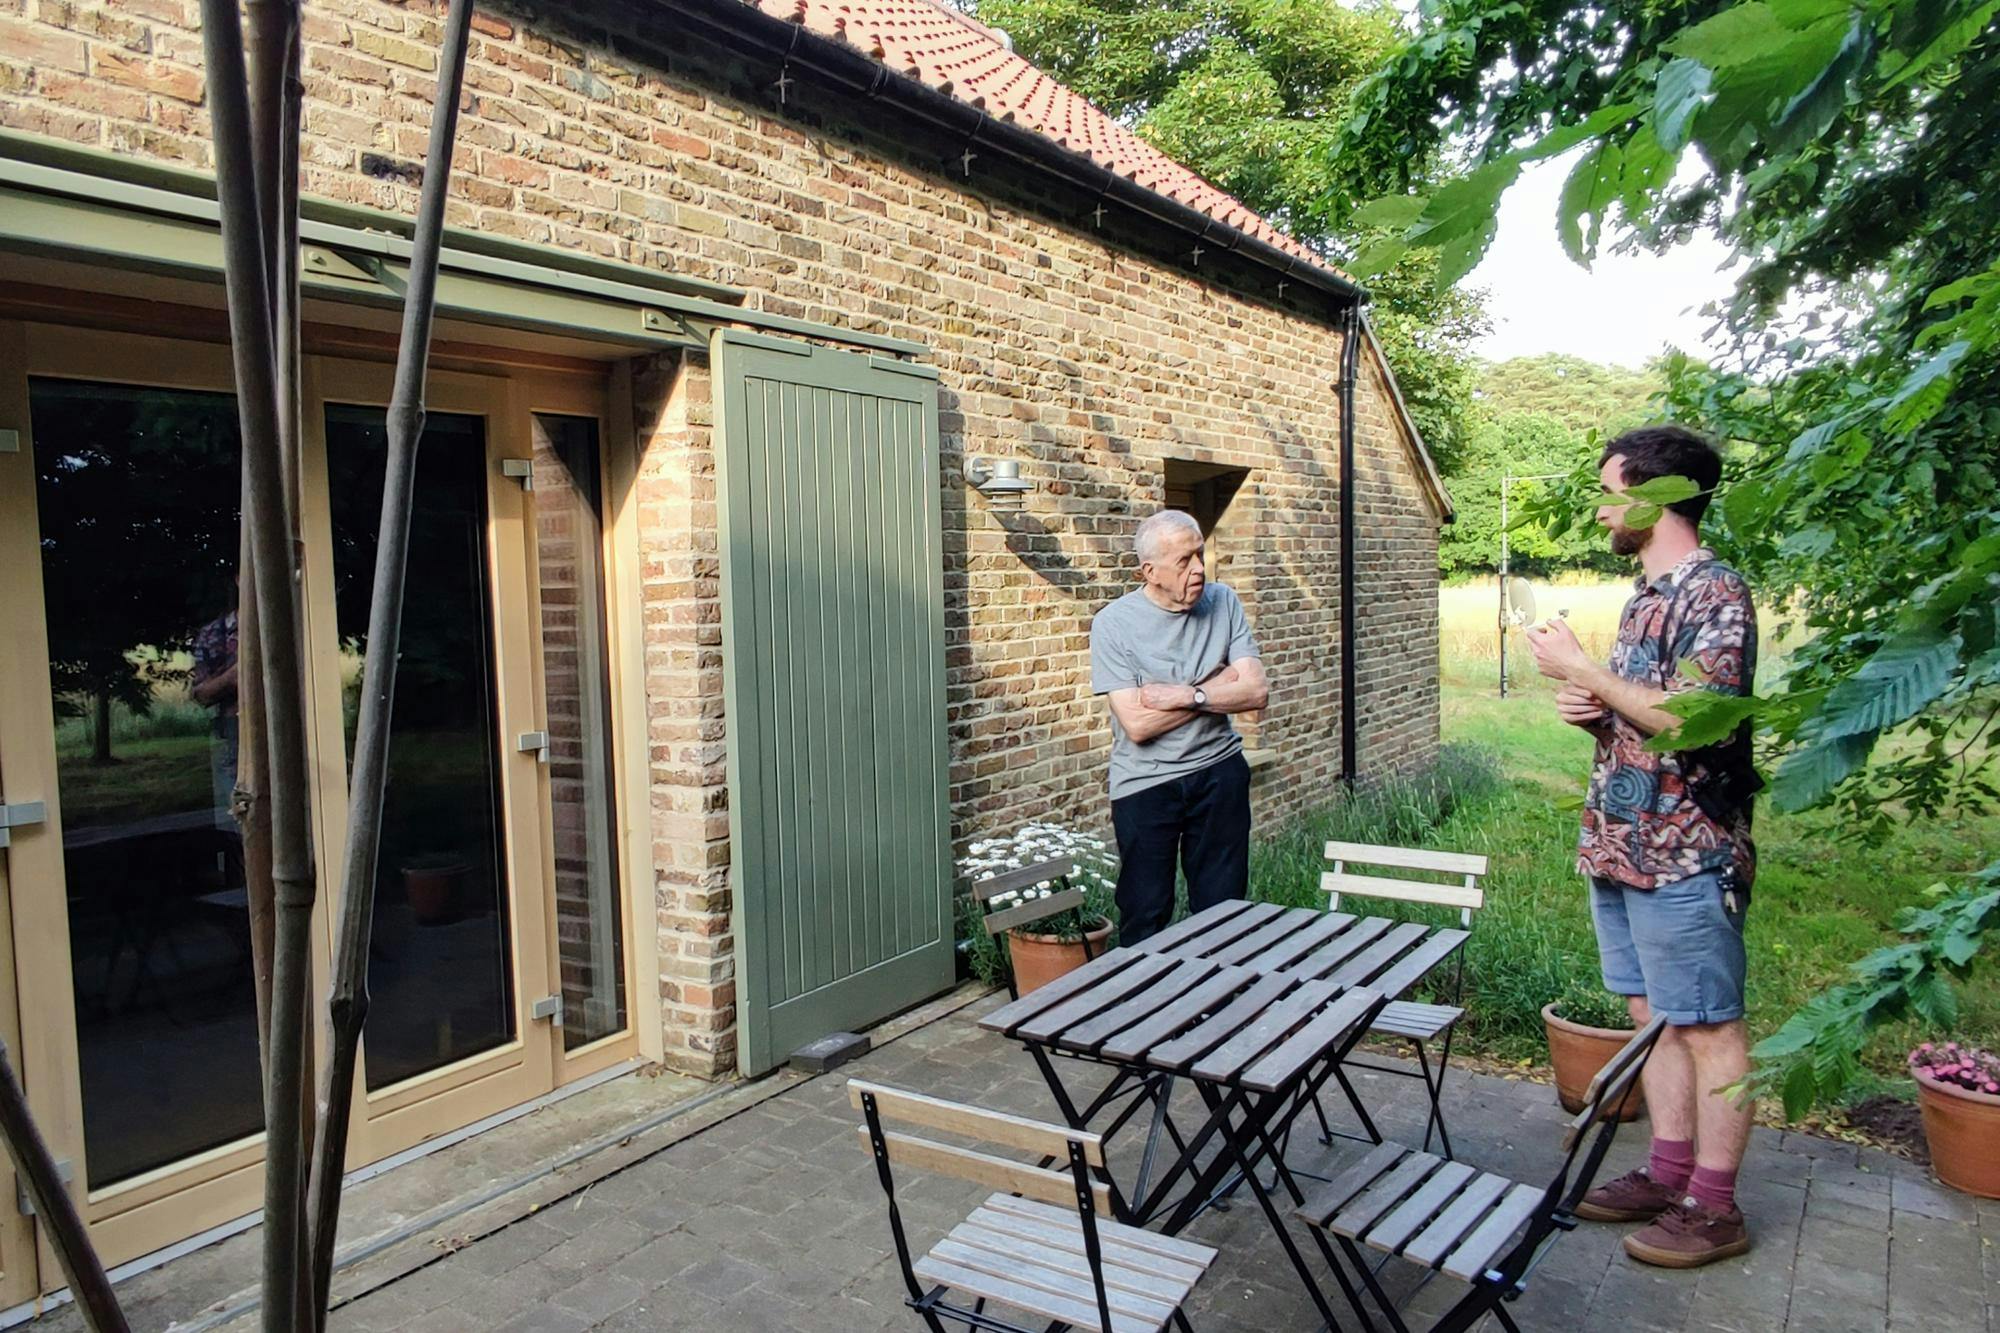 The client enjoys Warren Lodge, a modern interpretation of a traditional Norfolk barn